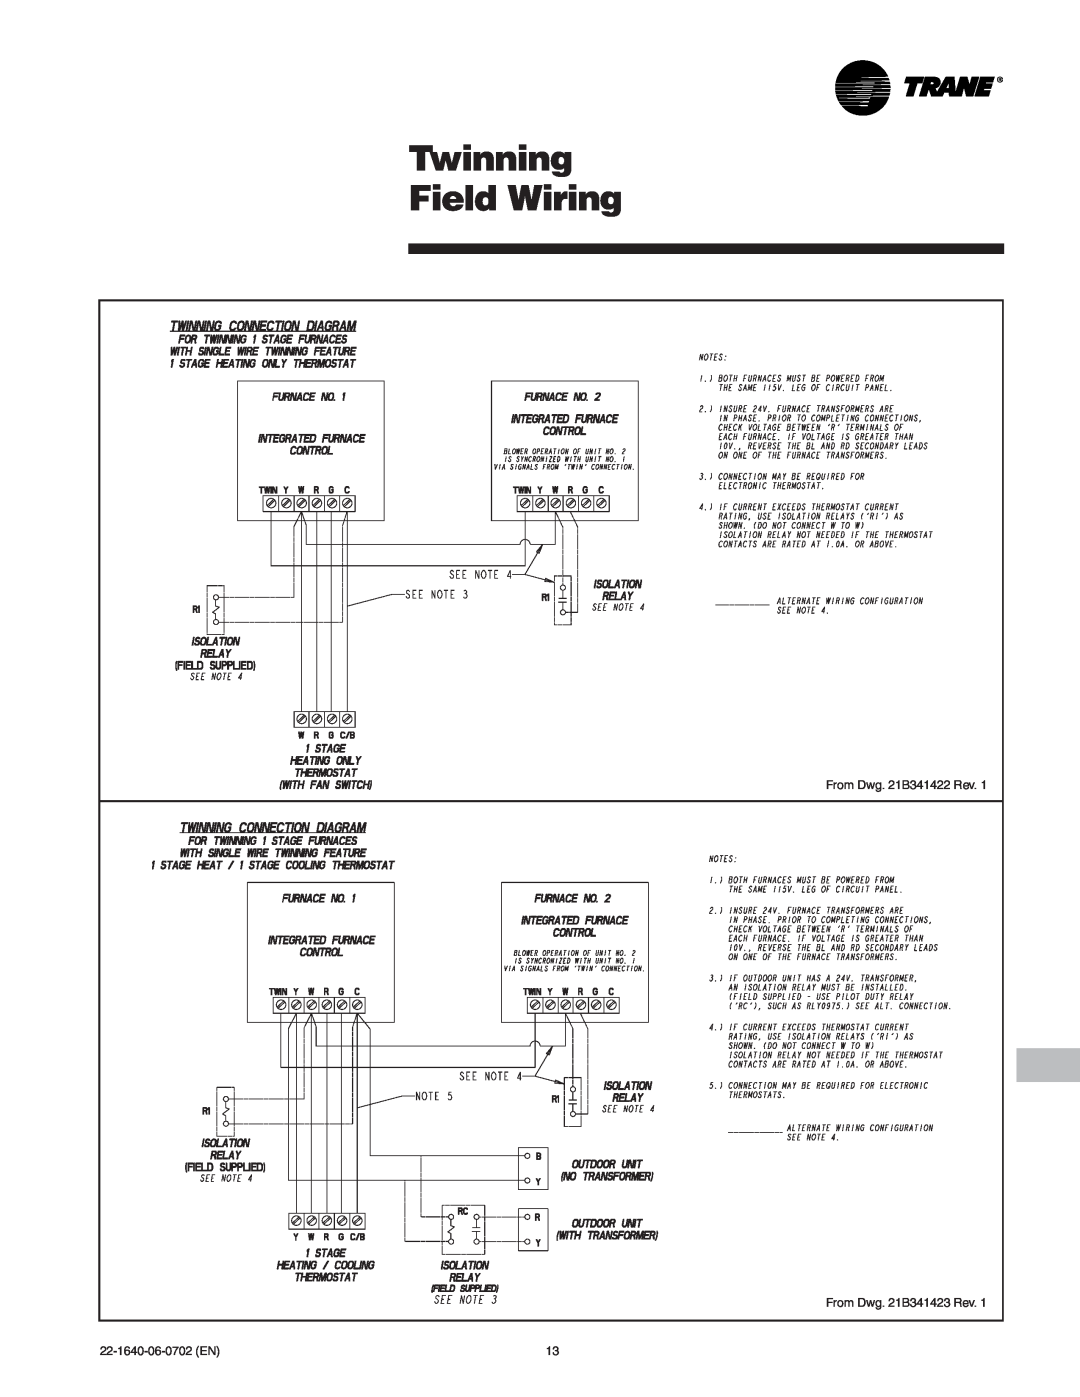 Trane Upflow/Horizontal Right or Upflow/Horizontal Left Induced Draft Gas Furnace, FURN-PRC001-EN Twinning, Field Wiring 